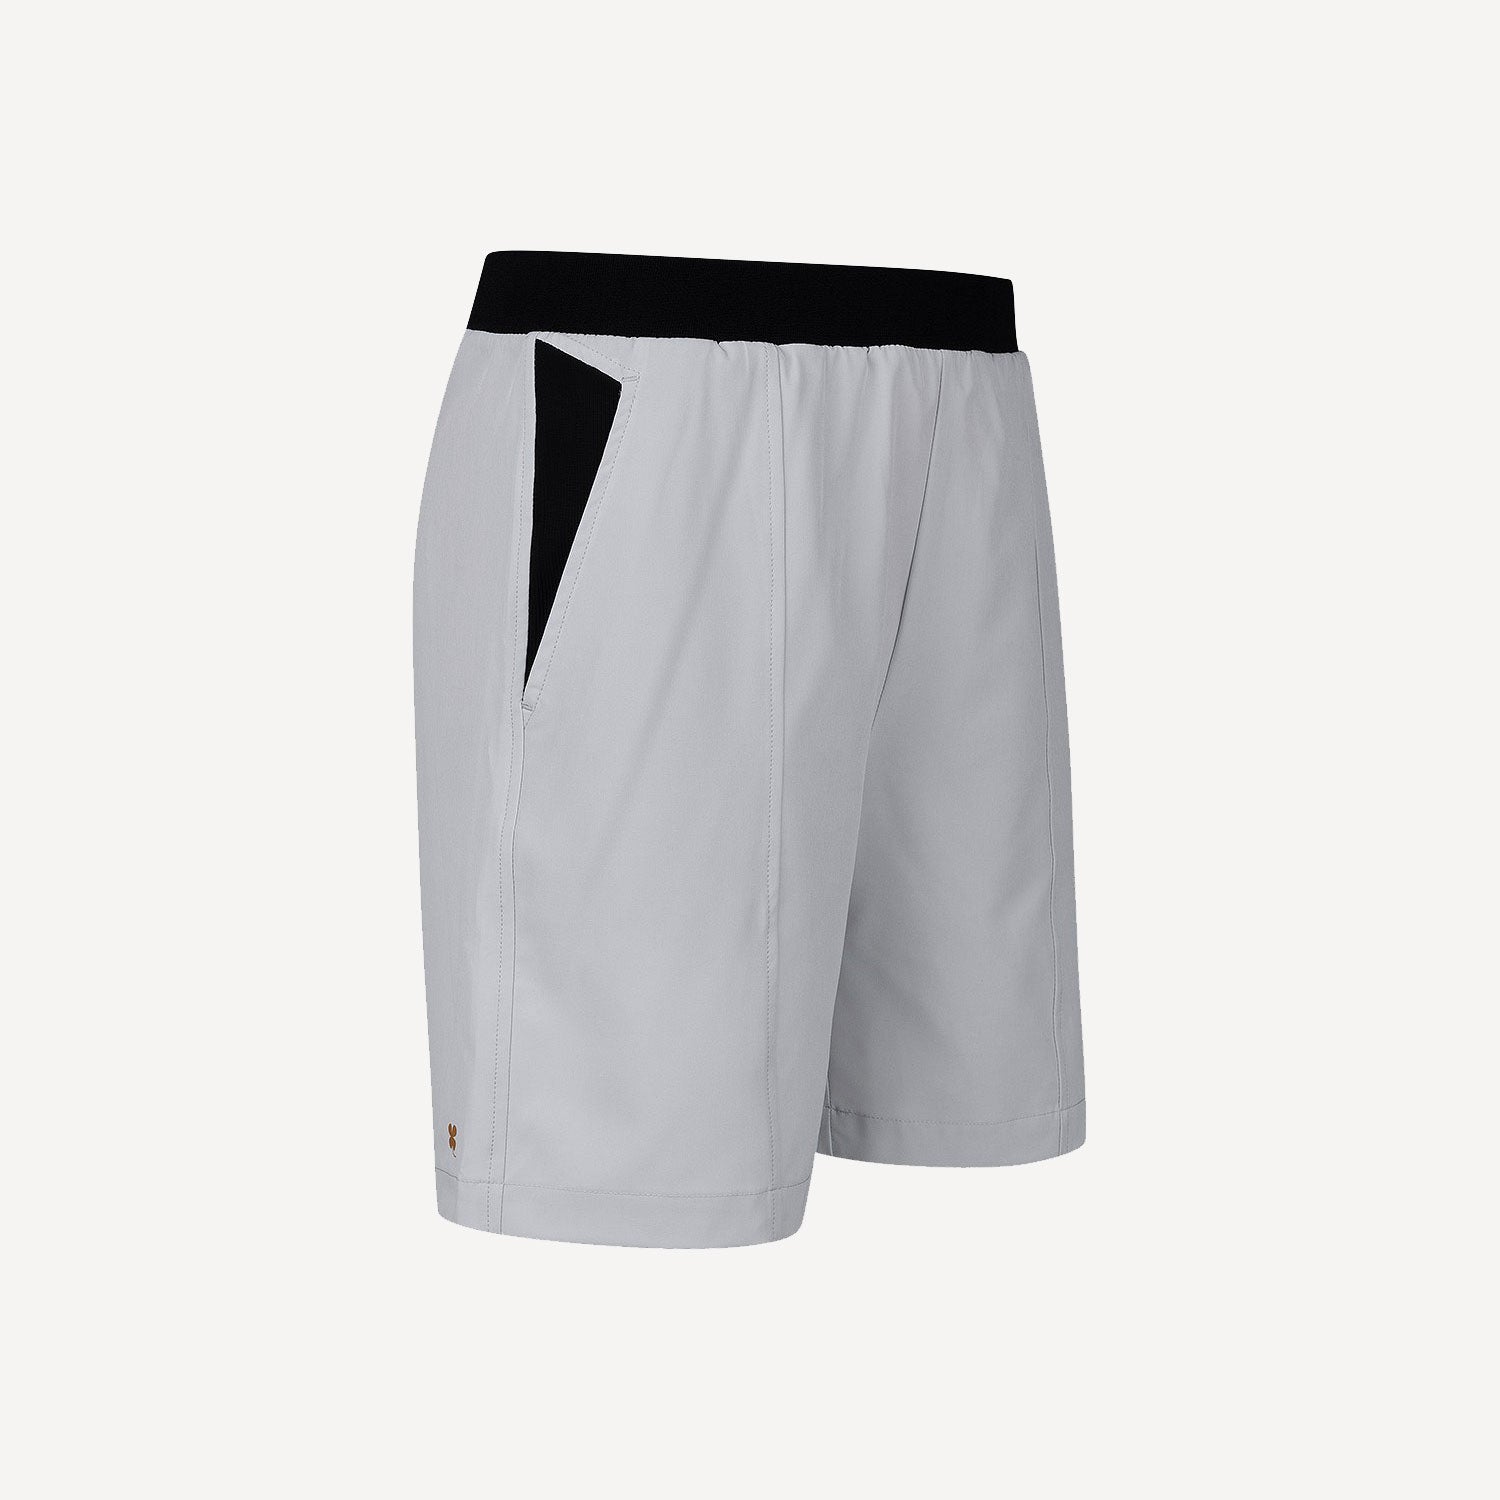 Robey Ace Men's Tennis Shorts - Grey (3)